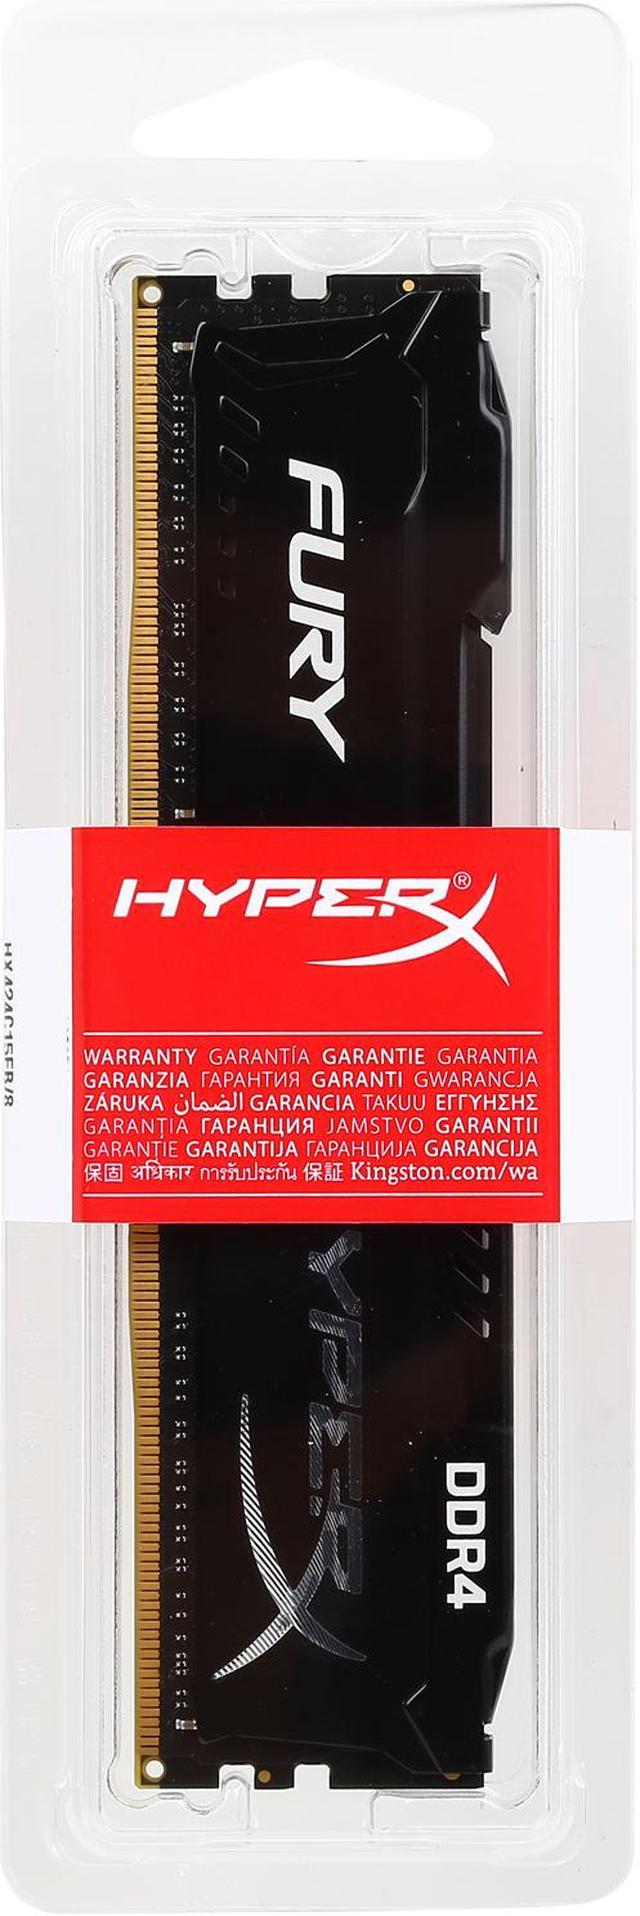 HyperX FURY 8GB DDR4 2400 (PC4 19200) Desktop Model HX424C15FB/8 Desktop Memory - Newegg.com